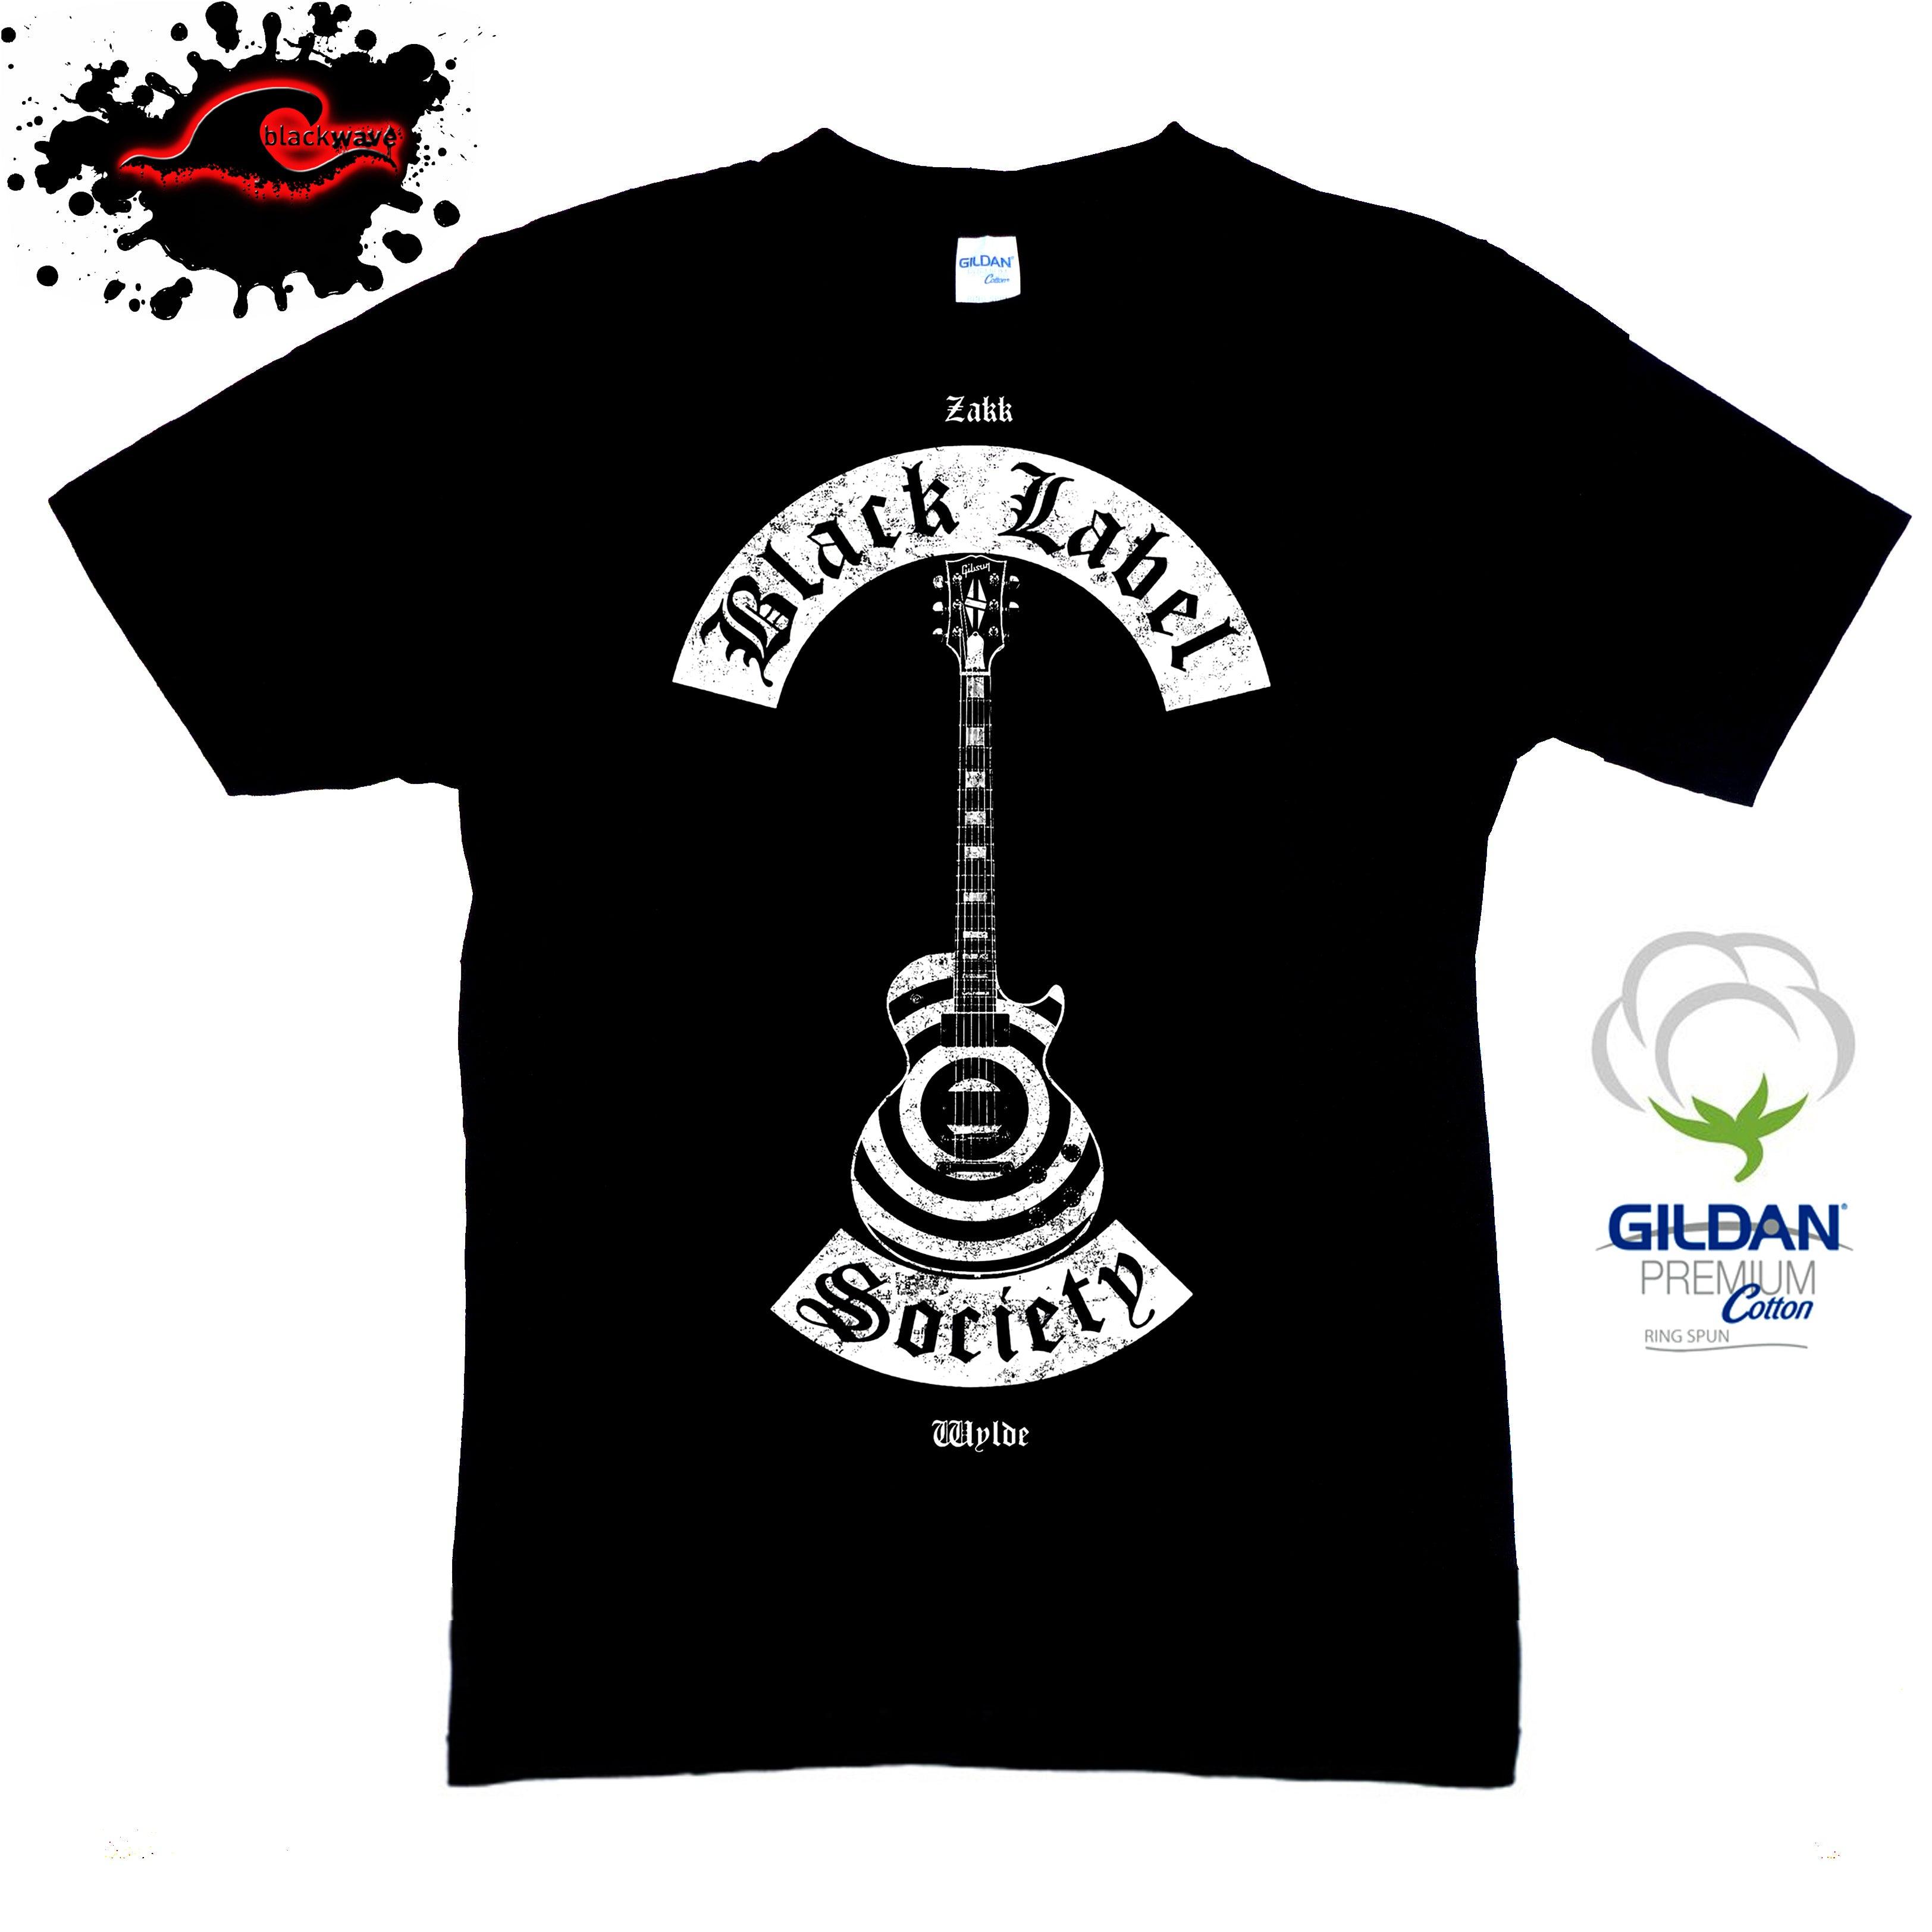 BLACK LABEL SOCIETY バンドTシャツ ザック・ワイルド